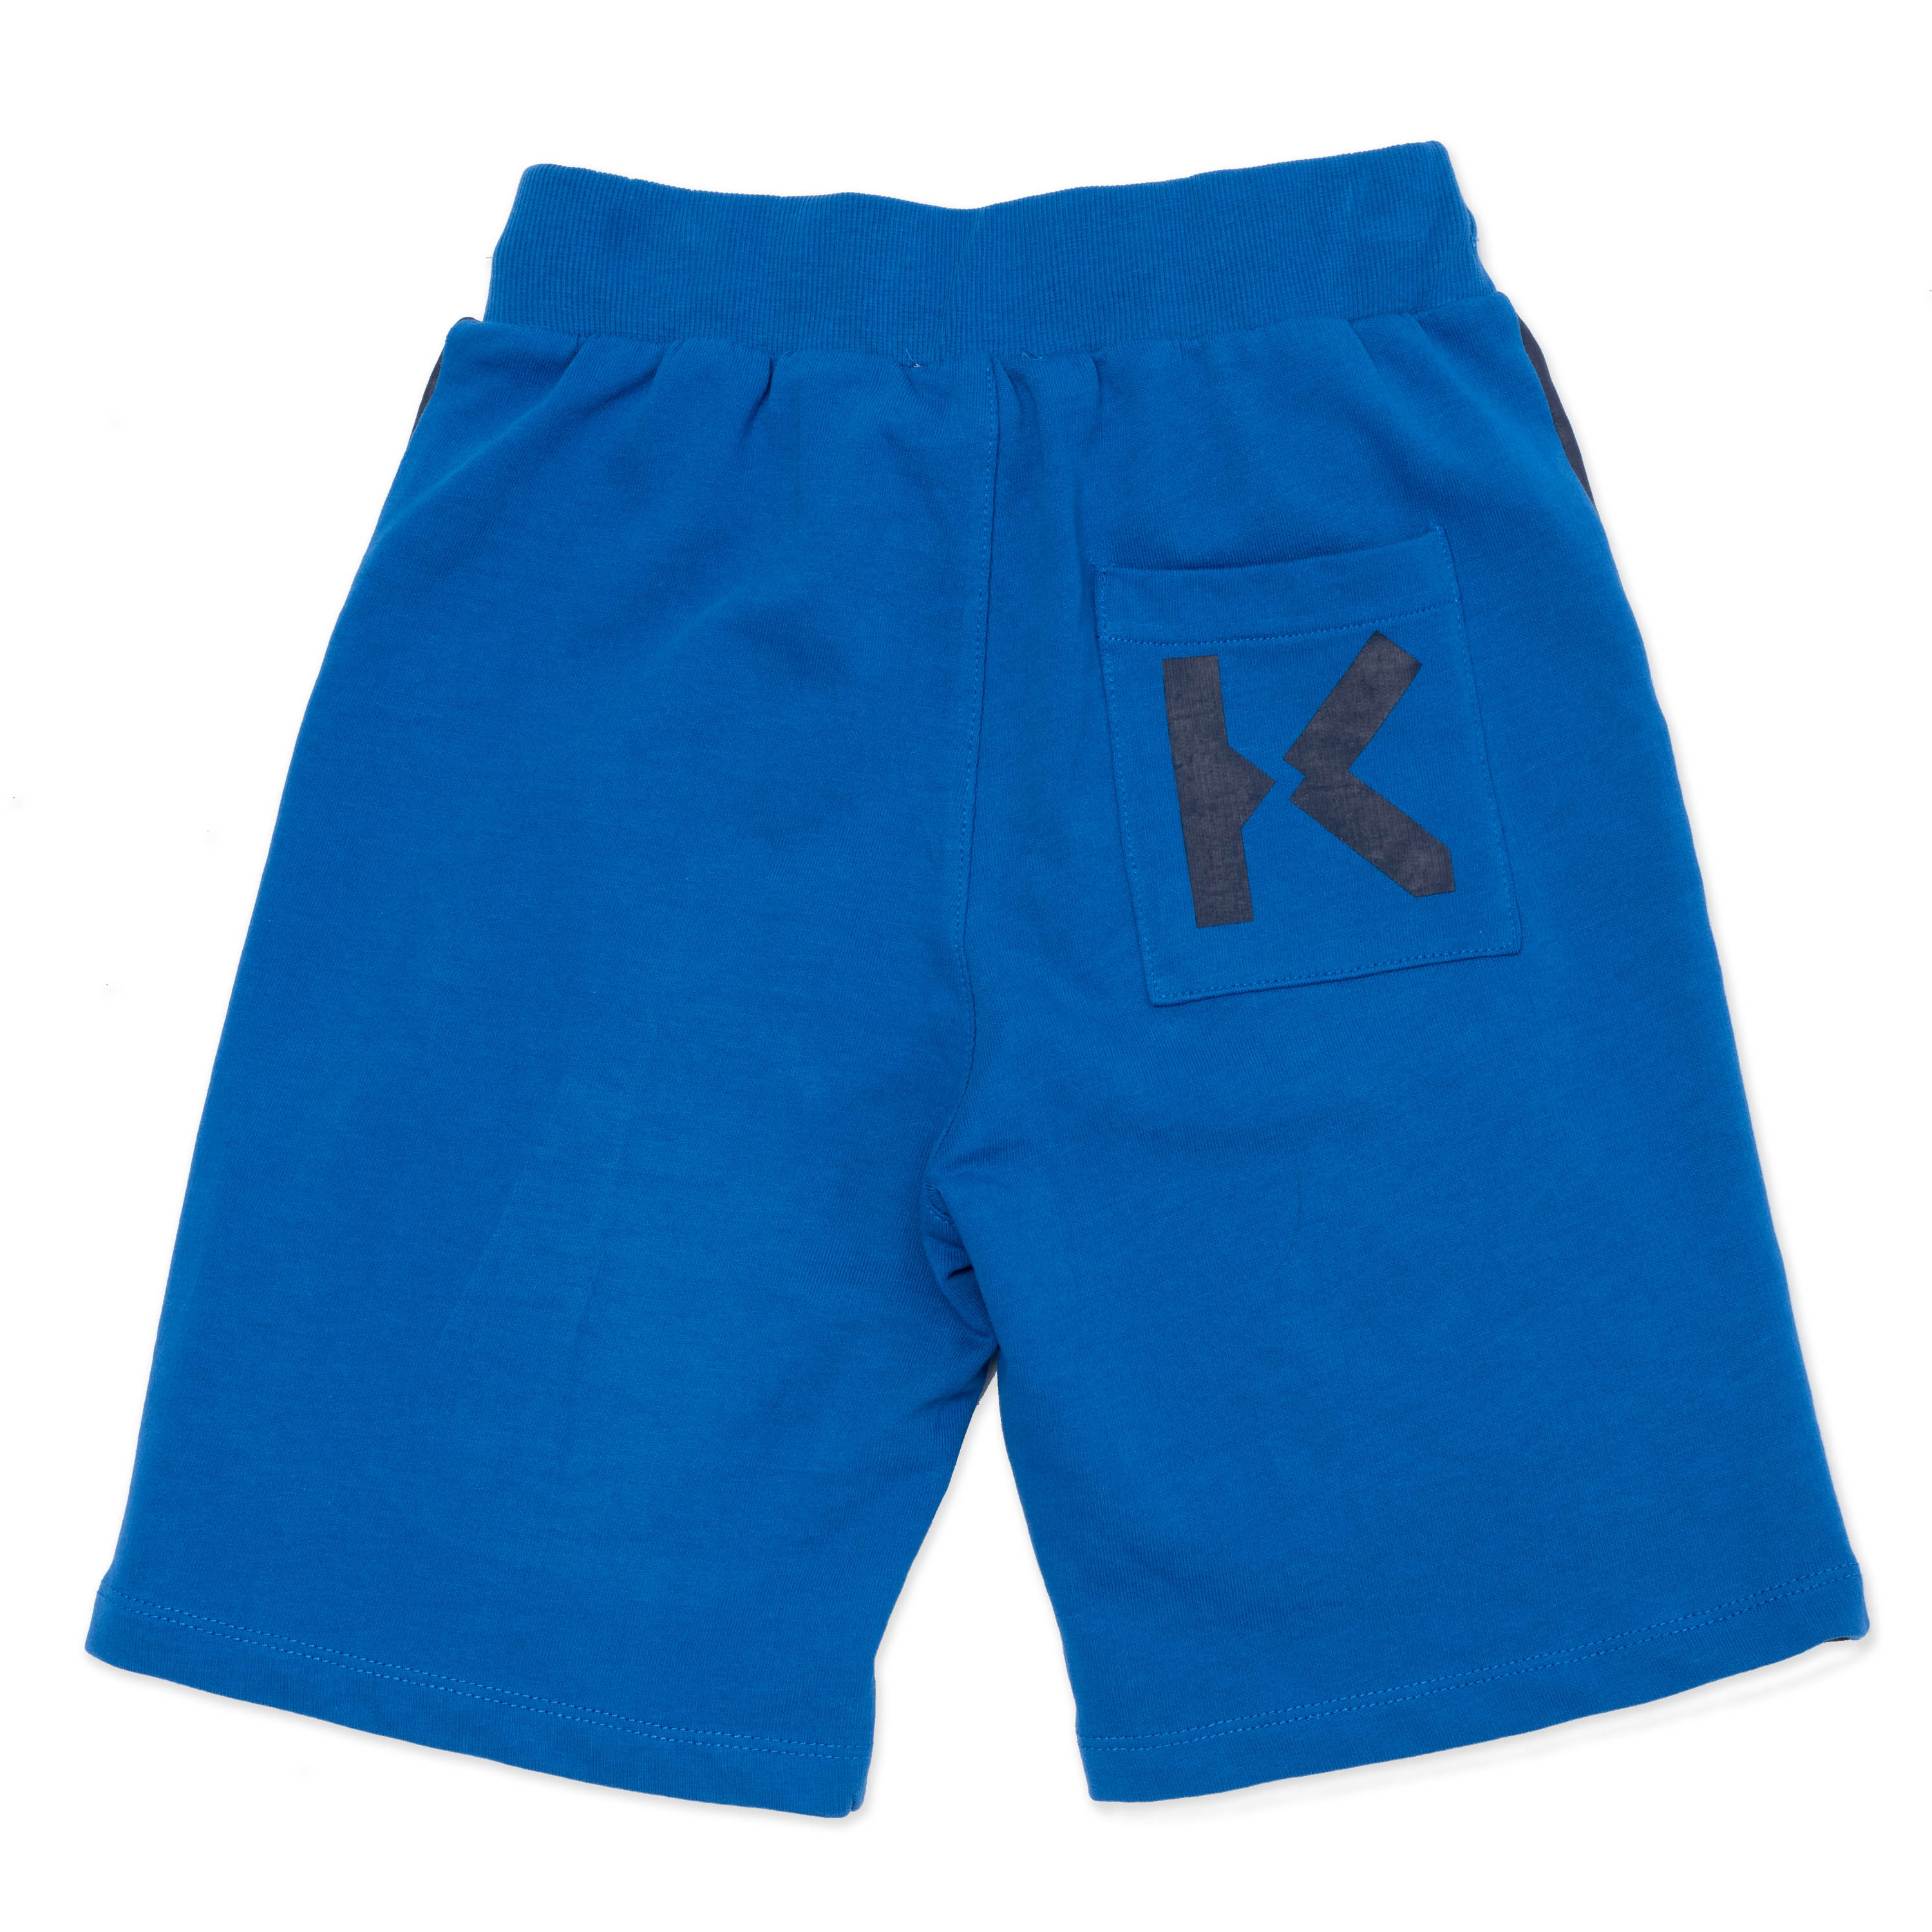 Bermuda shorts KENZO KIDS for BOY